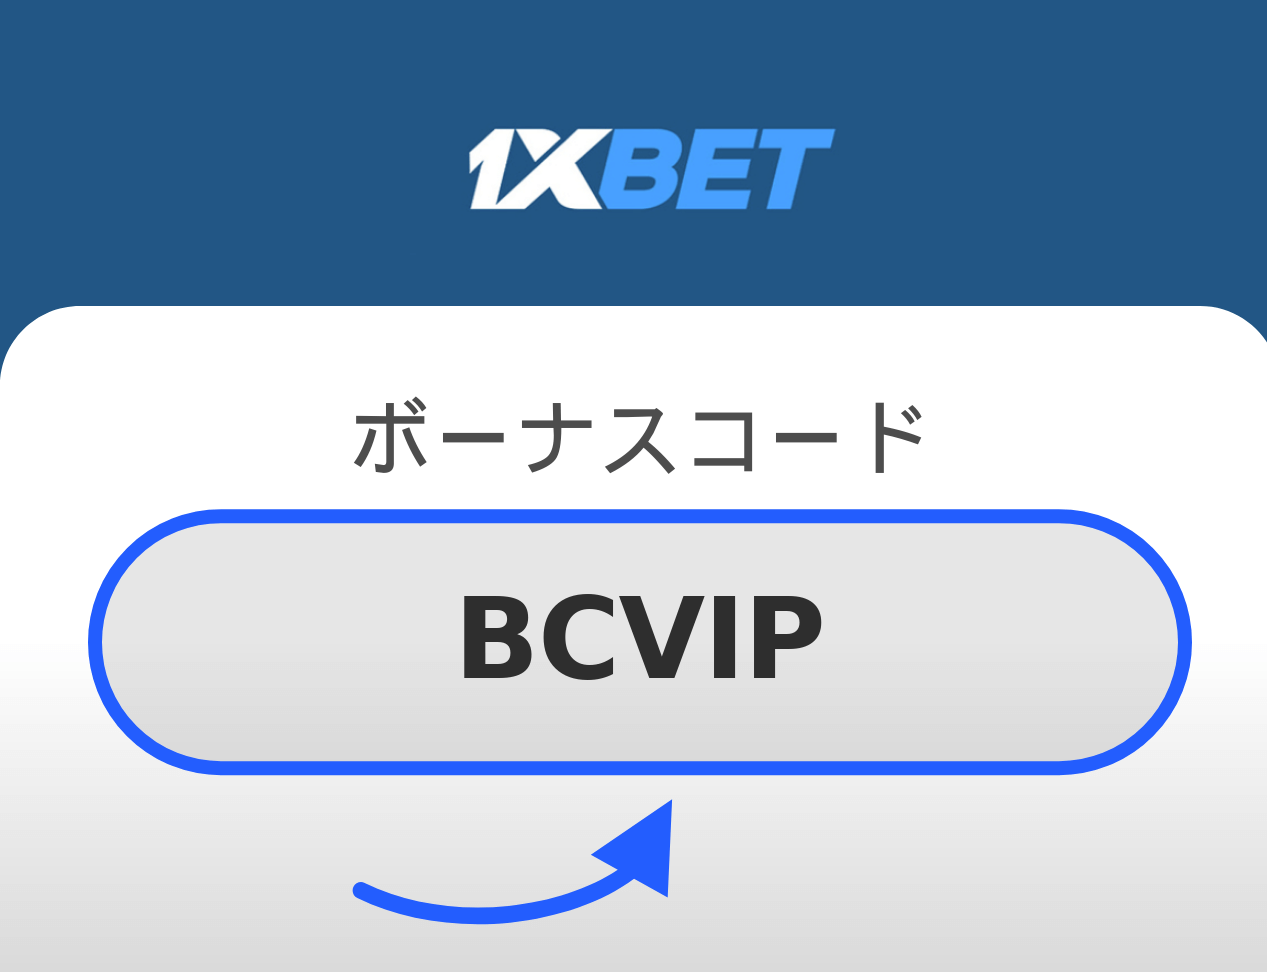 1XBET プロモコード: BCVIP